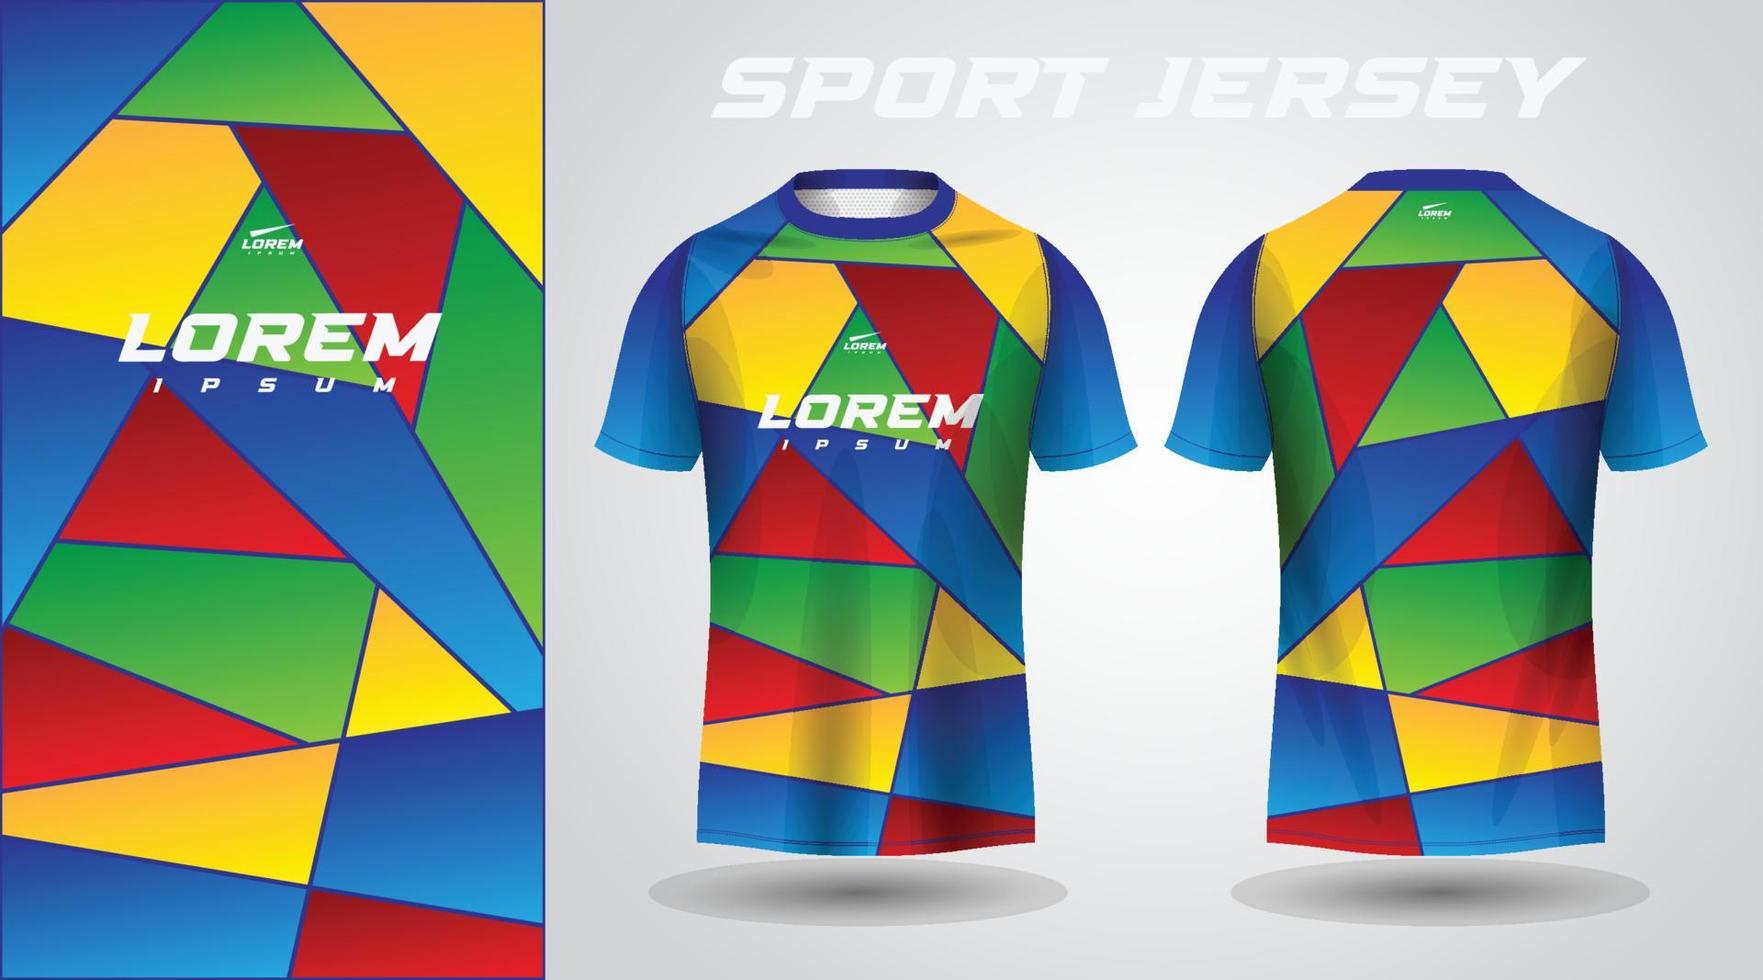 colorful shirt sport jersey design vector